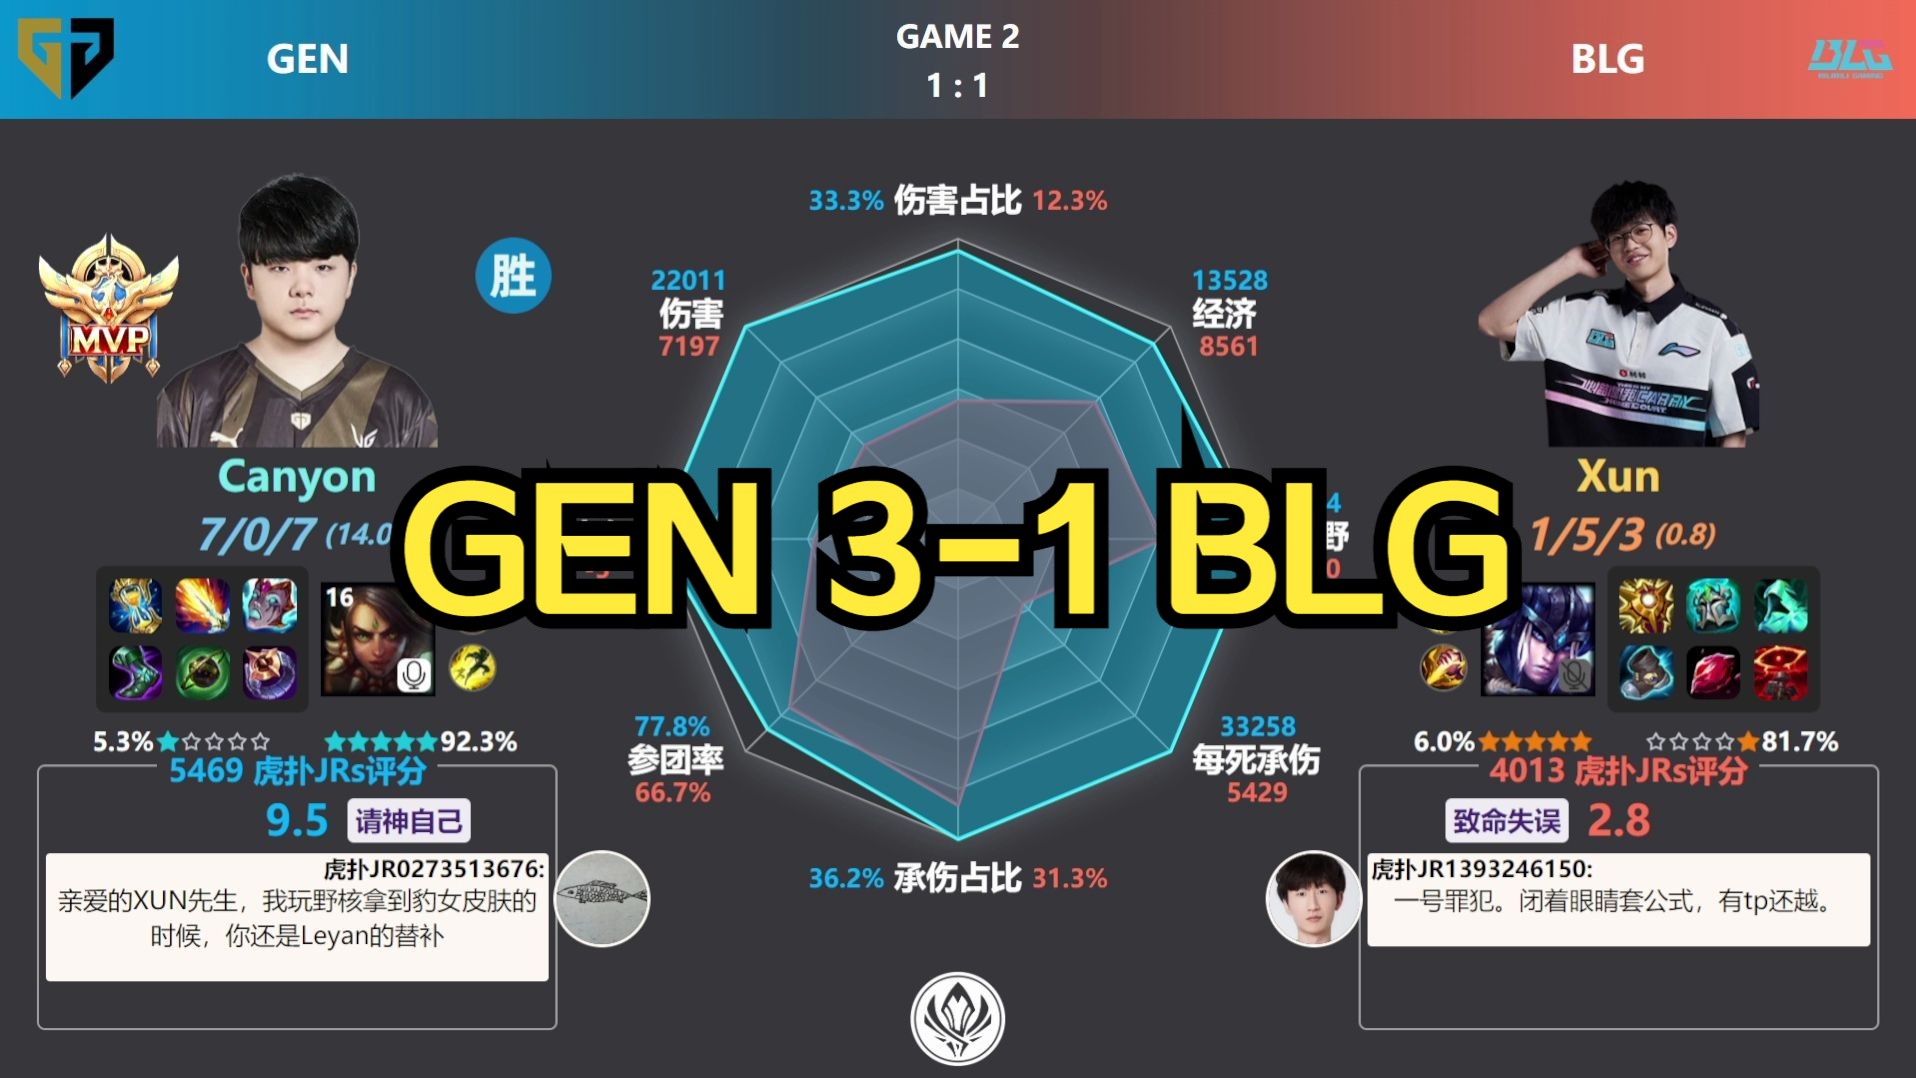 GEN 3-1 BLG 虎扑现状+赛后数据雷达图 | MSI胜者组决赛